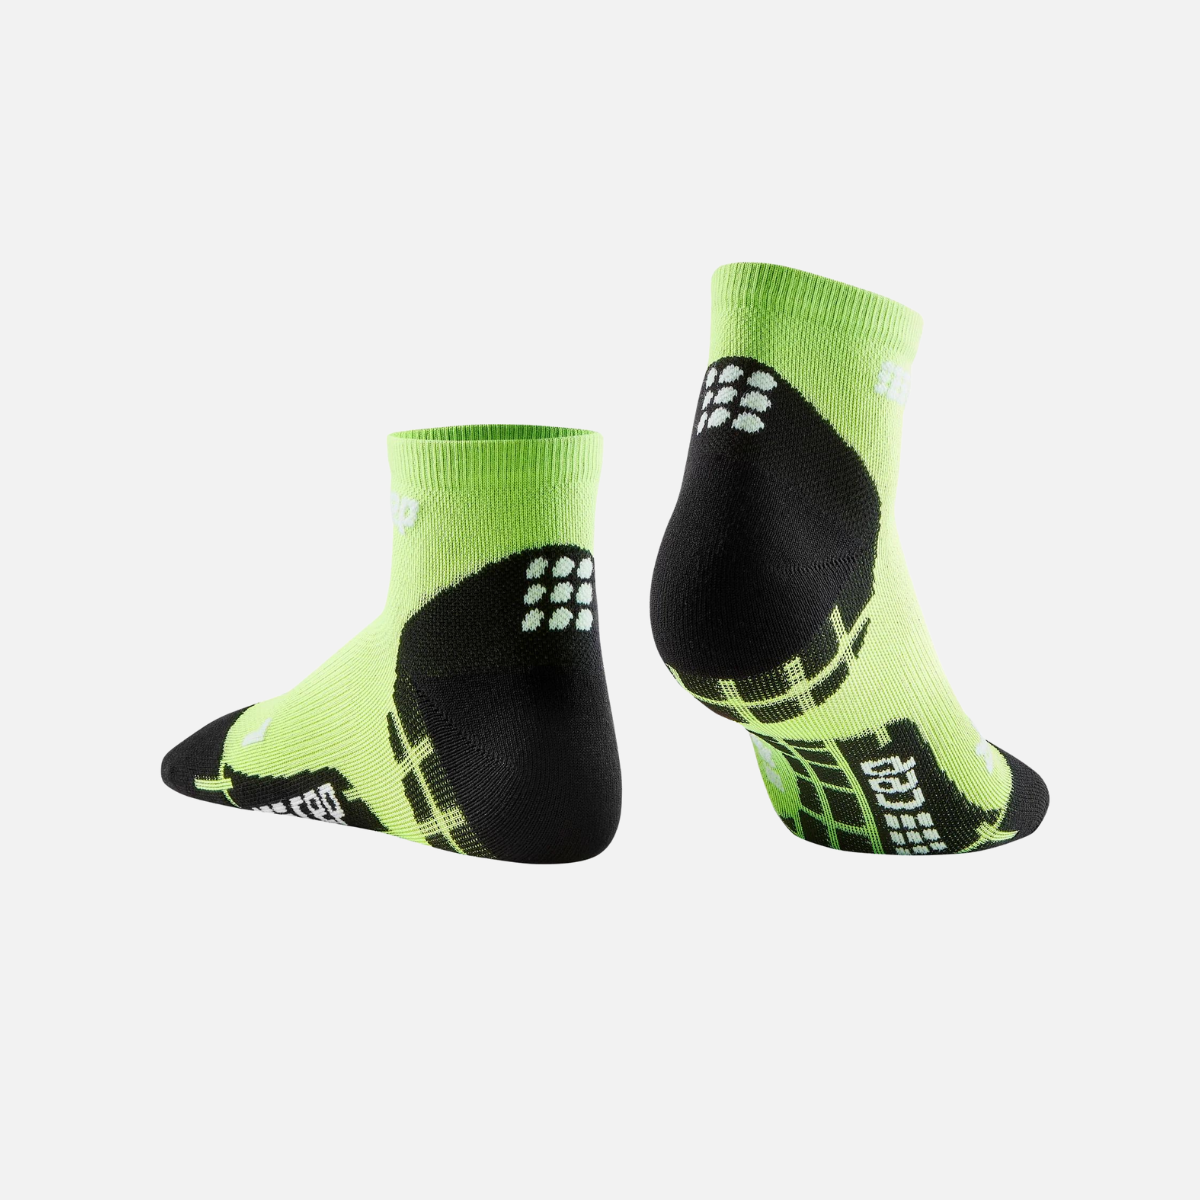 Cep Ultralight Compression Low-Cut Women's Socks -Green/Black